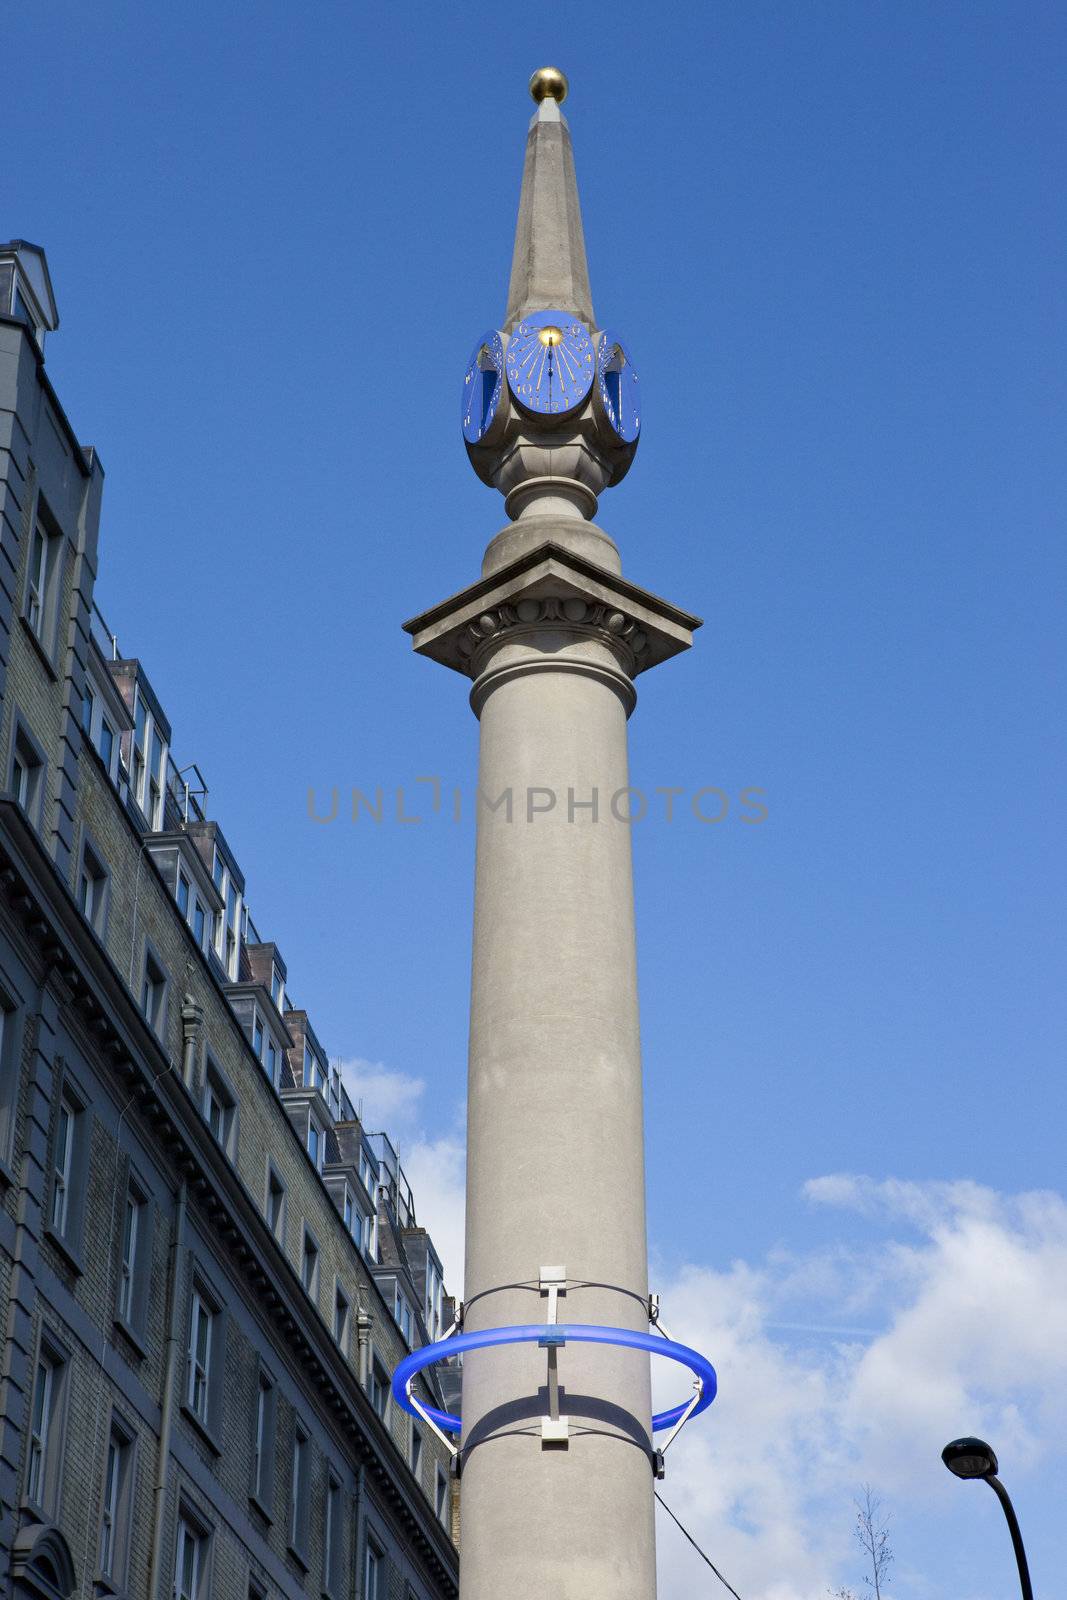 The Seven Dials Sundial Pilar in London.